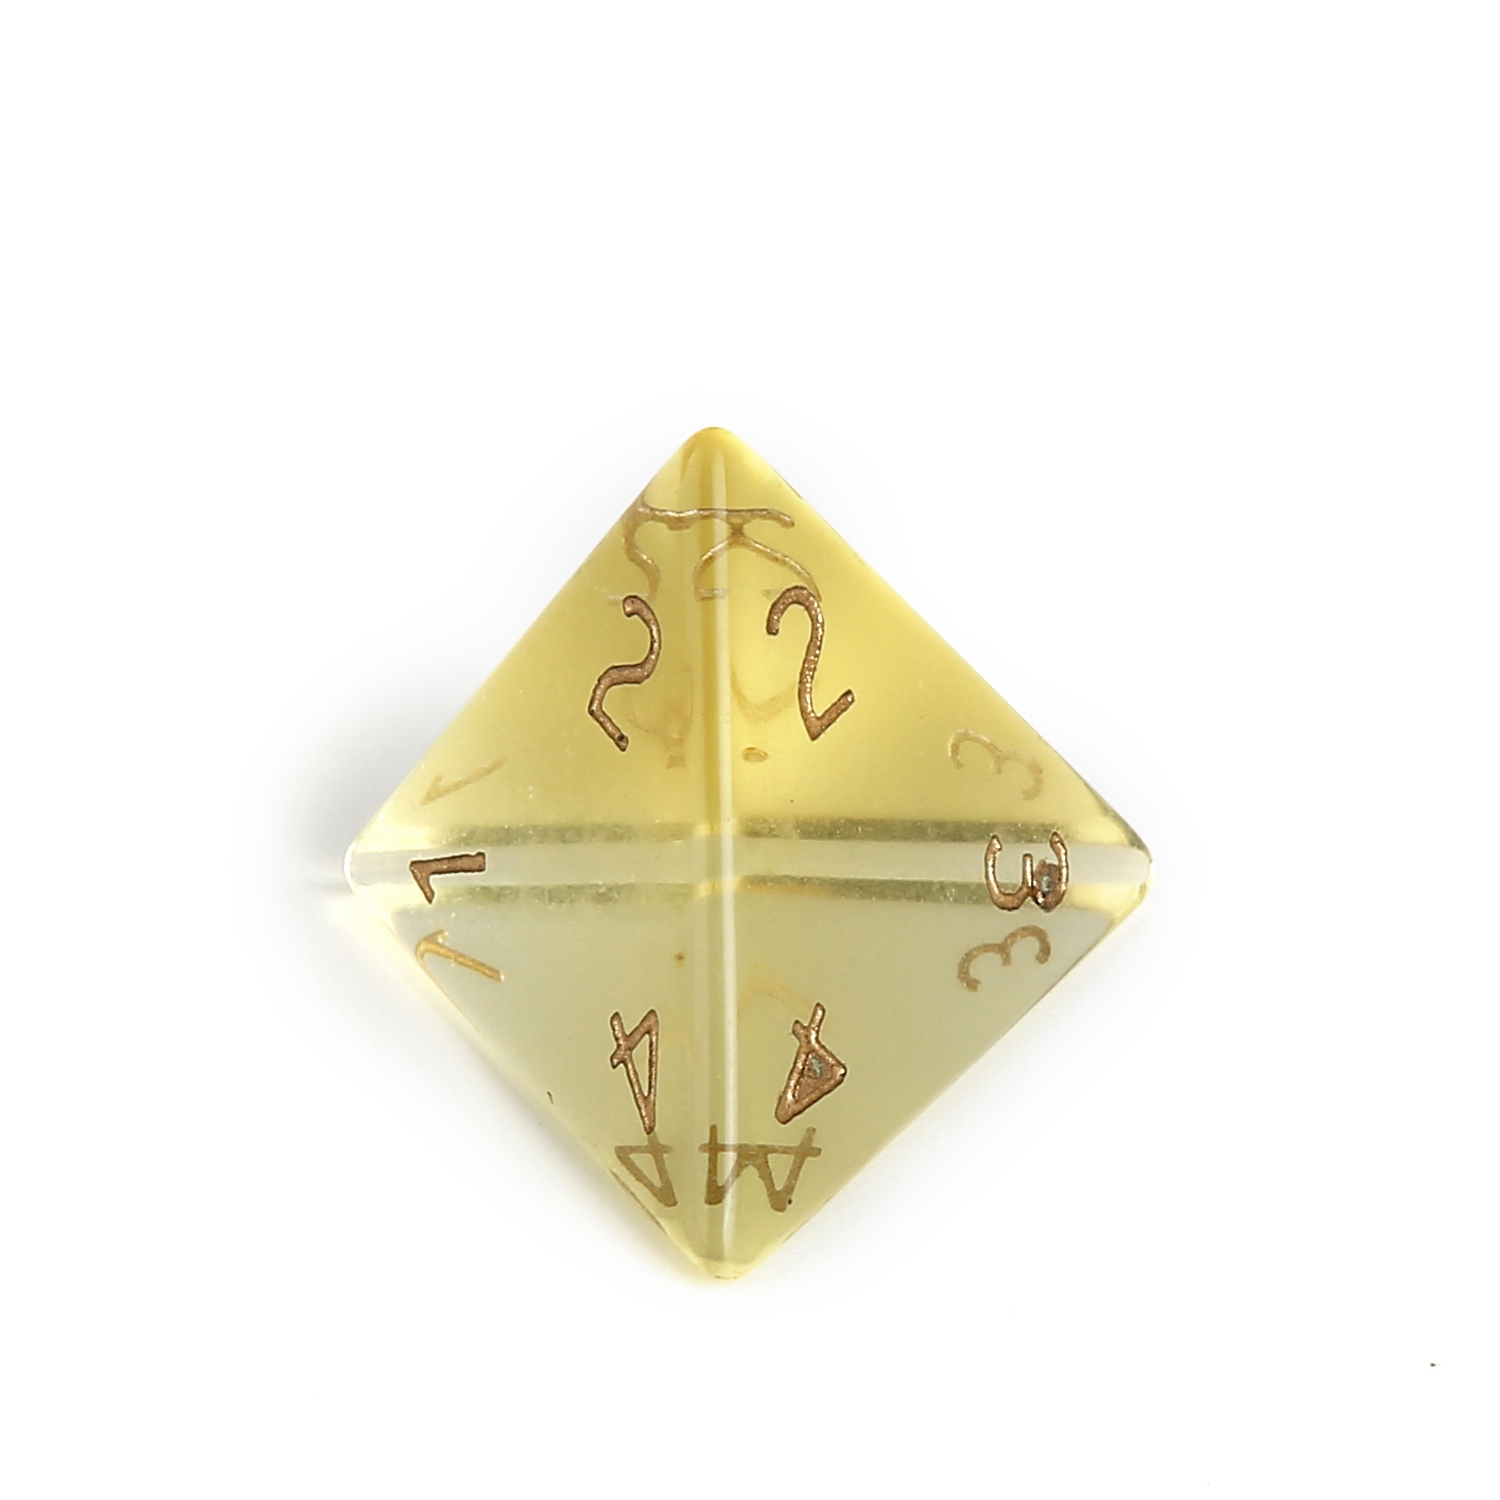 6:D4 icosahedron